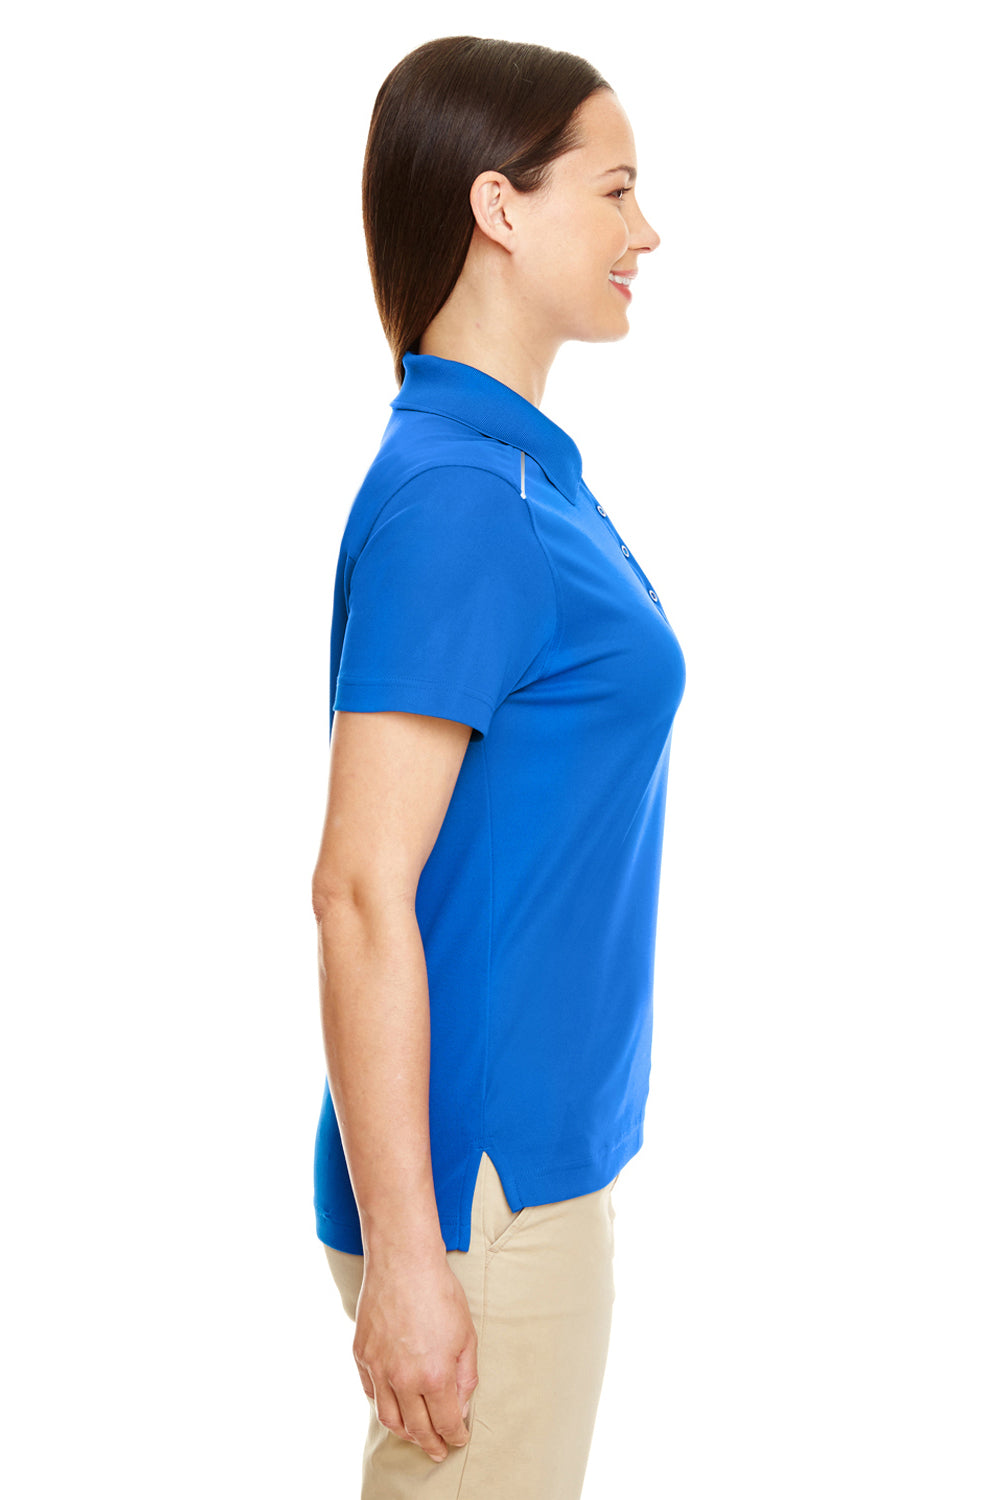 Core 365 78181R Womens Radiant Performance Moisture Wicking Short Sleeve Polo Shirt Royal Blue Side